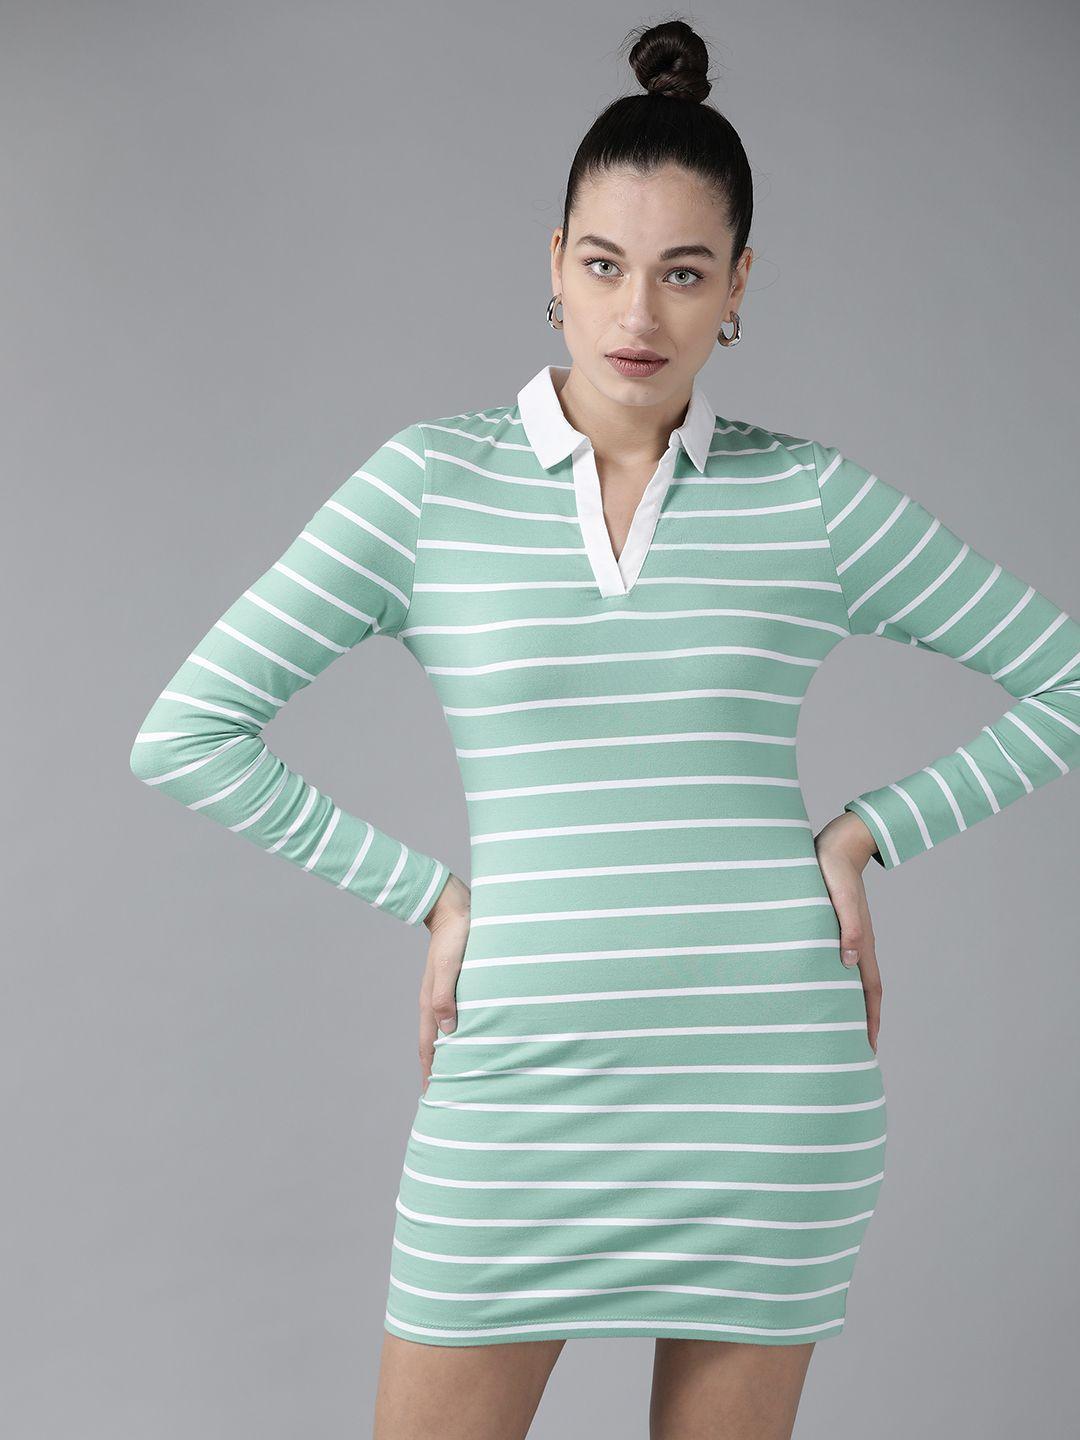 kassually sea green & white striped shirt collar pure cotton bodycon dress